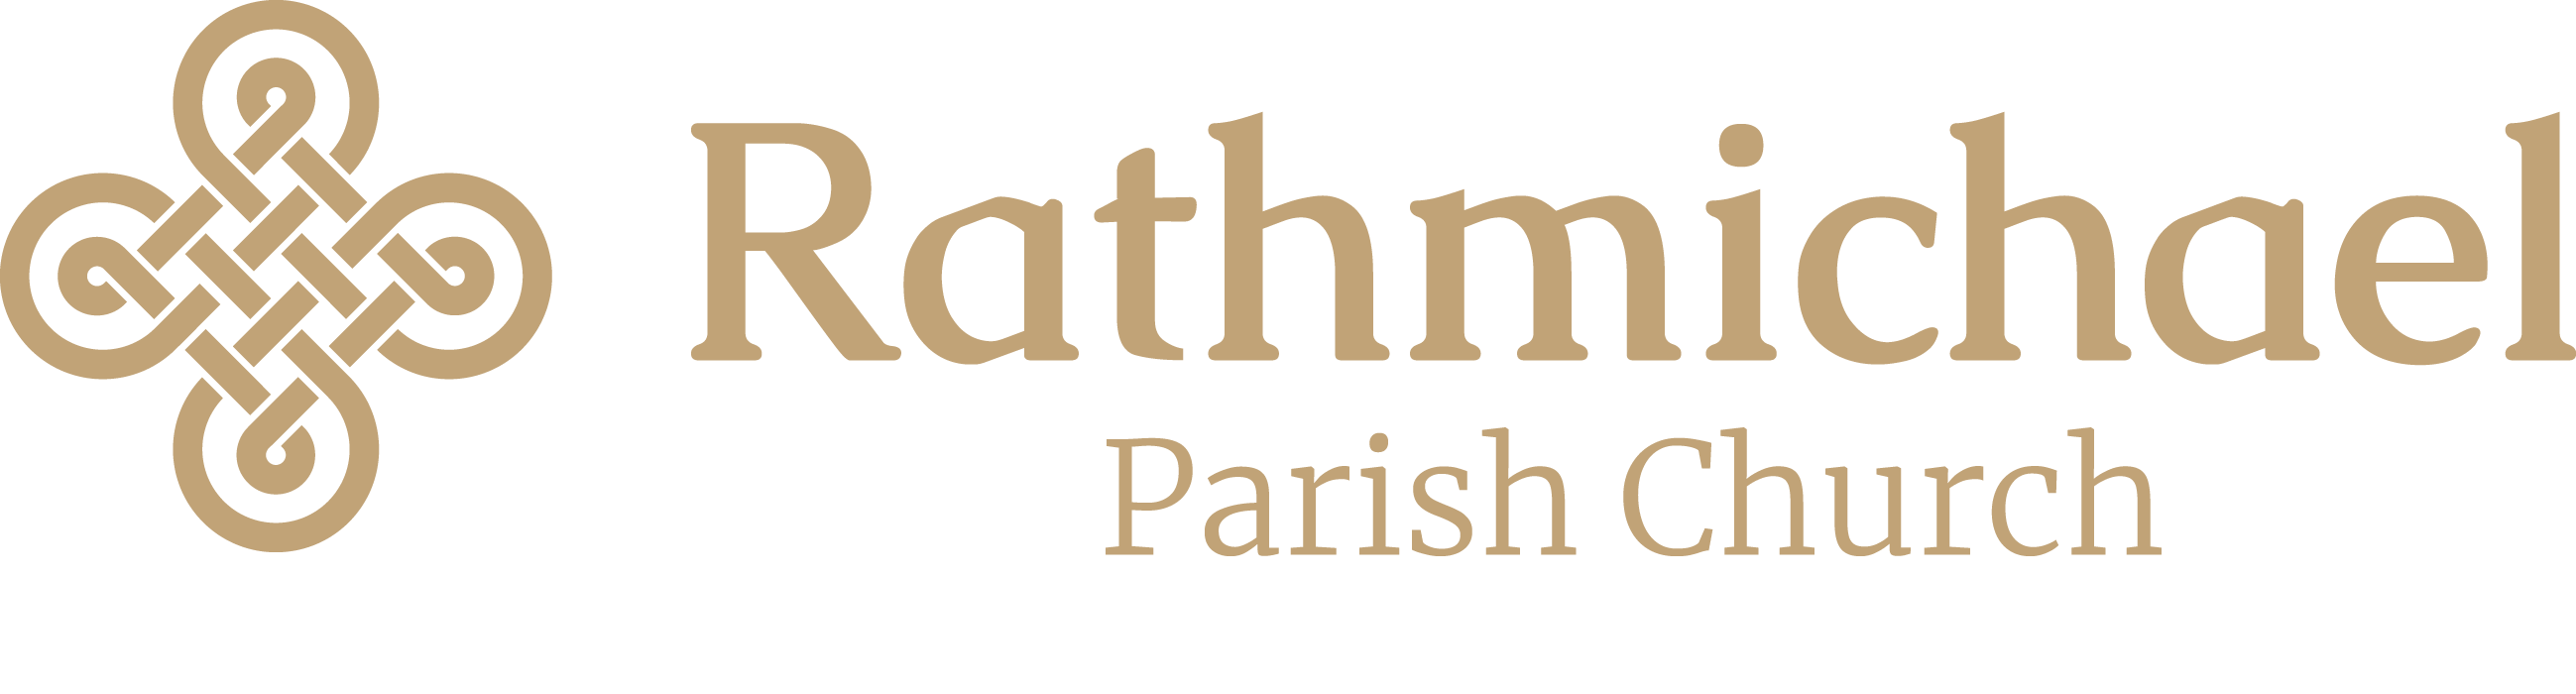 Rathmichael Parish Church